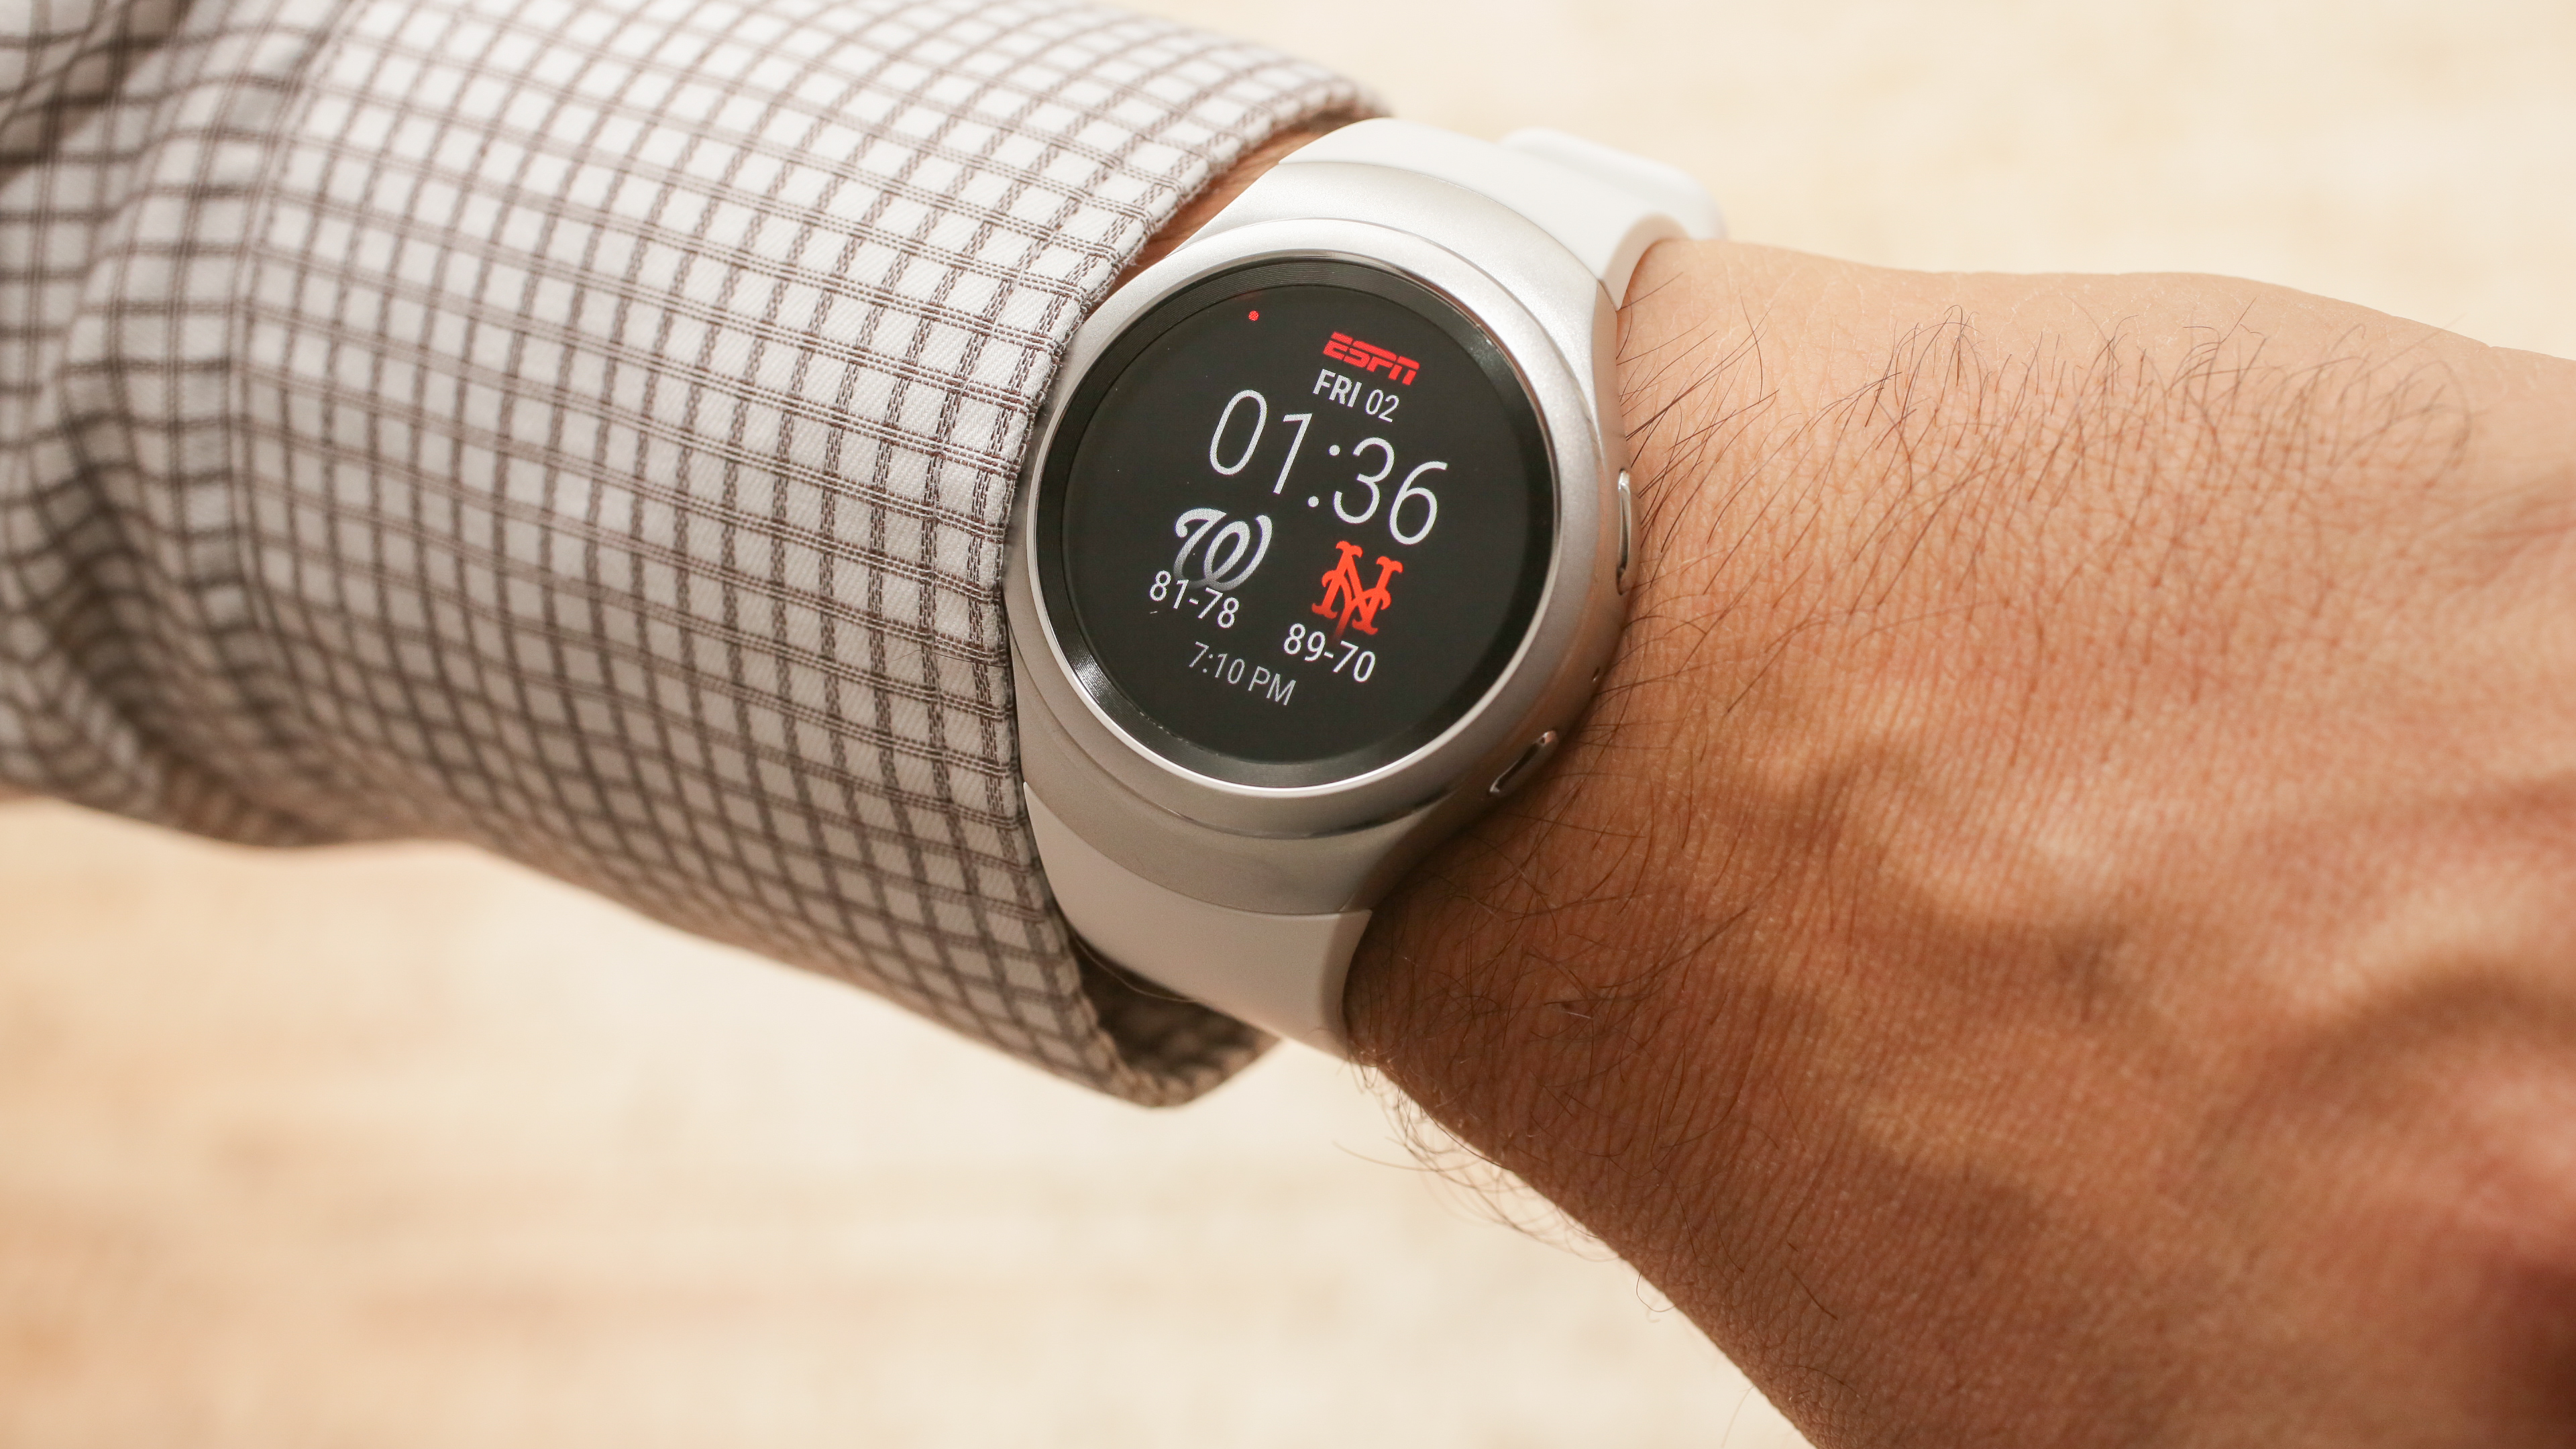 Samsung galaxy watch давление. Часы с давлением. Gear s3 датчик давления. Samsung watch 5 watch face Electric Meter. Картинки на часы самсунг вотч.